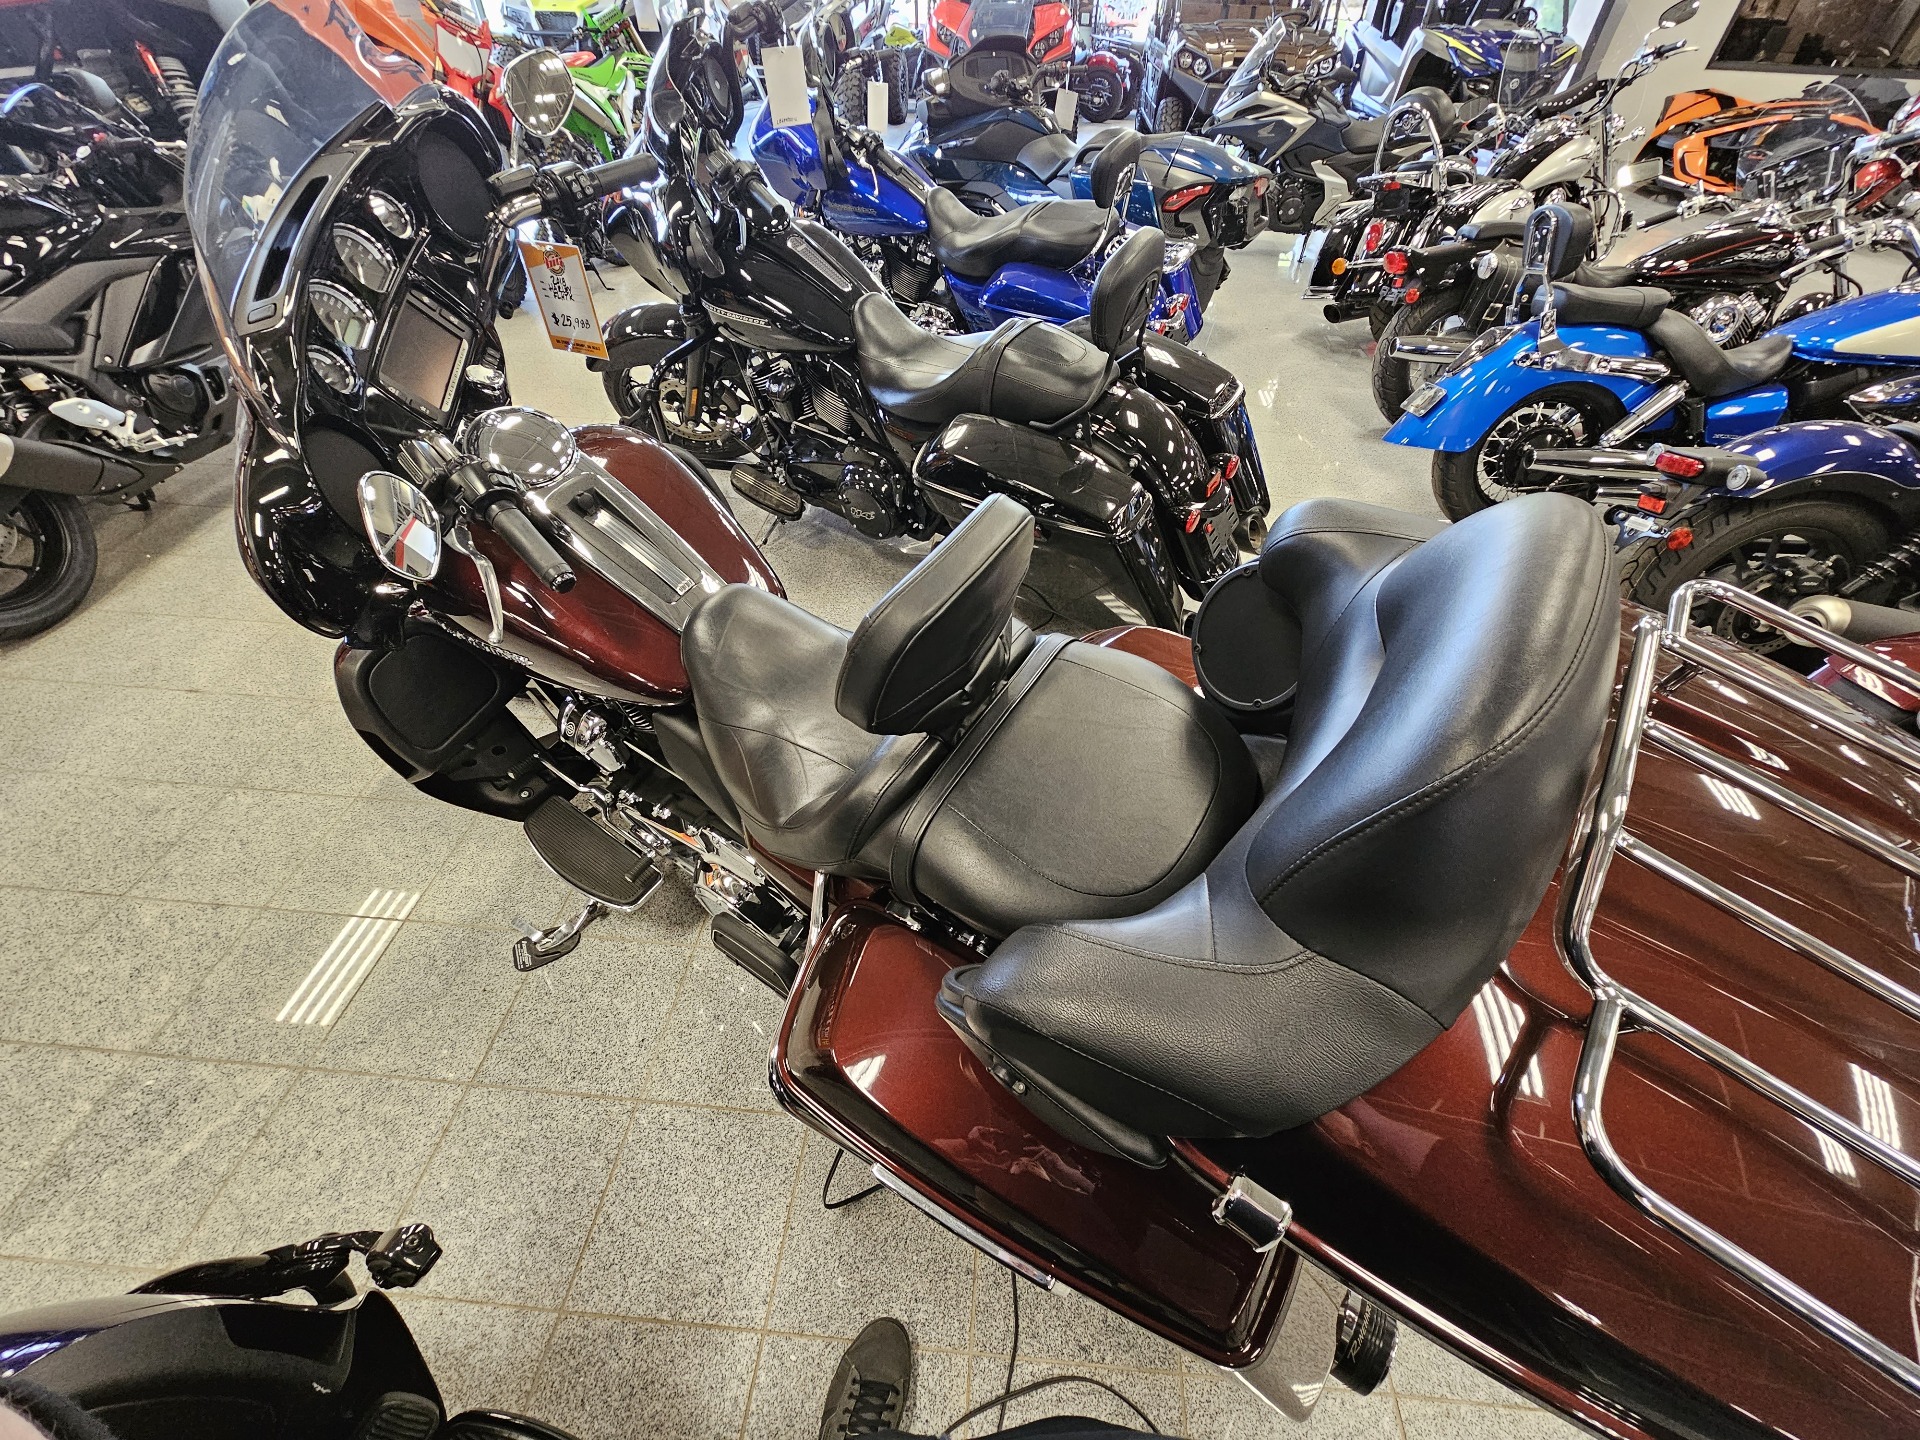 2018 Harley-Davidson Ultra Limited in Marietta, Ohio - Photo 3